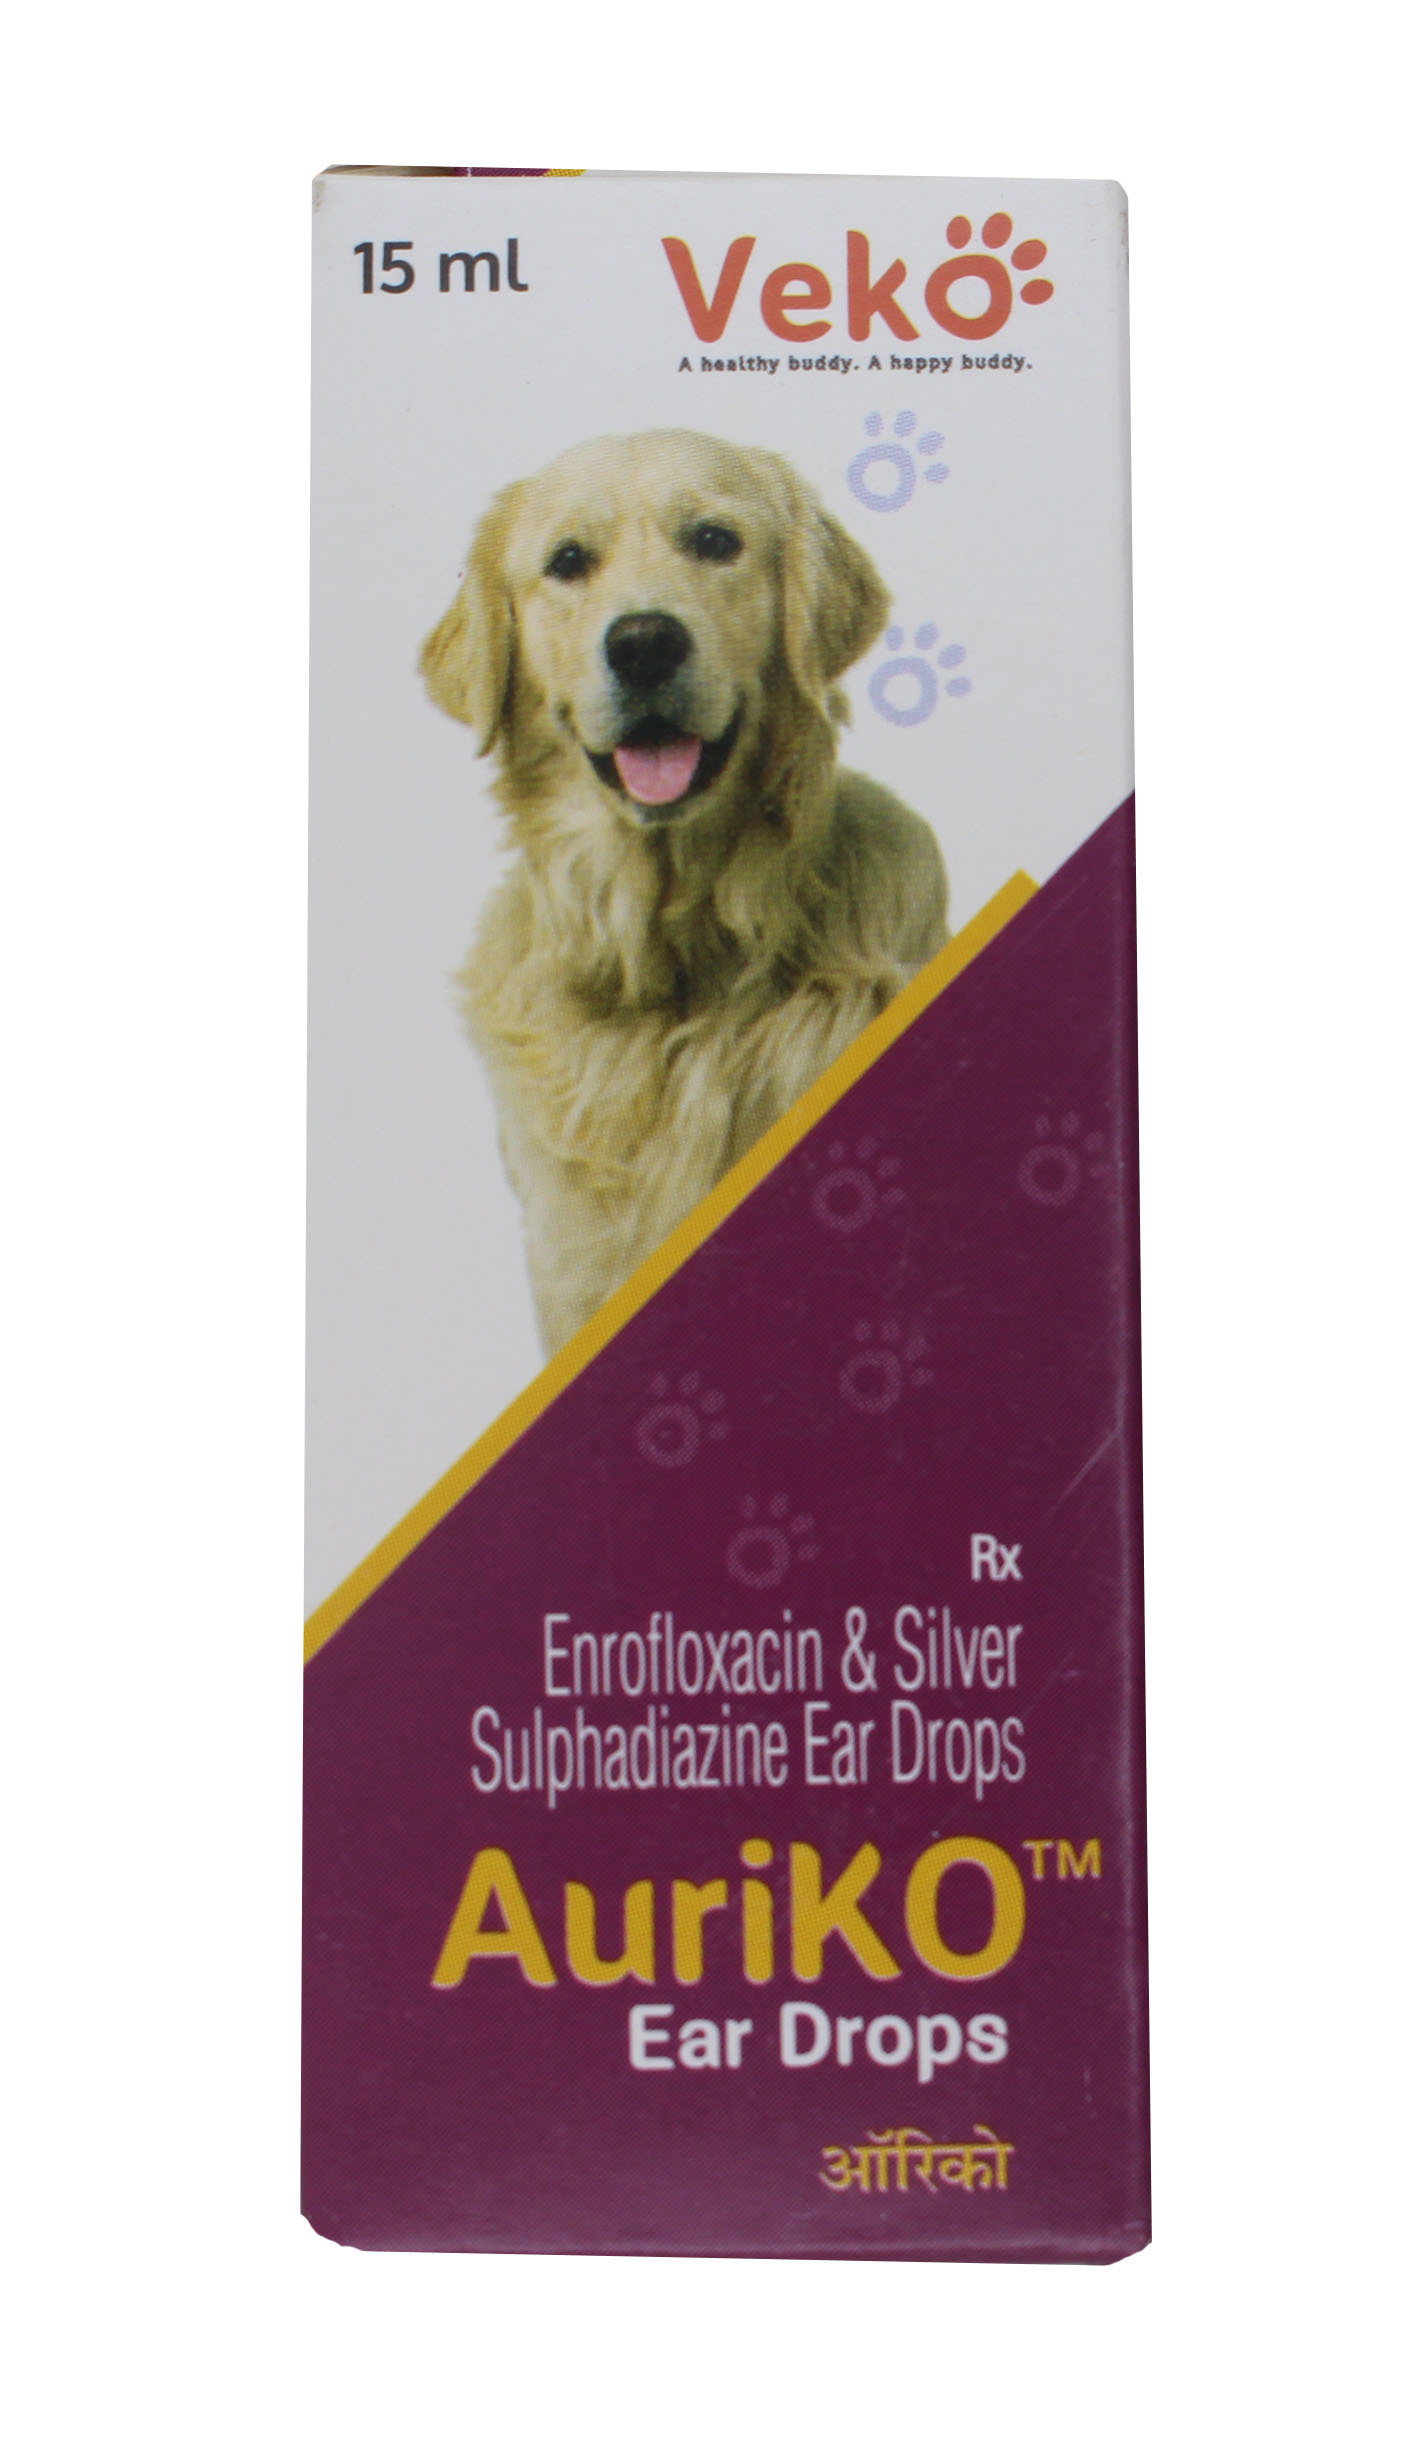 Auriko Ear Drops-ENROFLOXACIN 5MG Plus SULPHADIAZINE